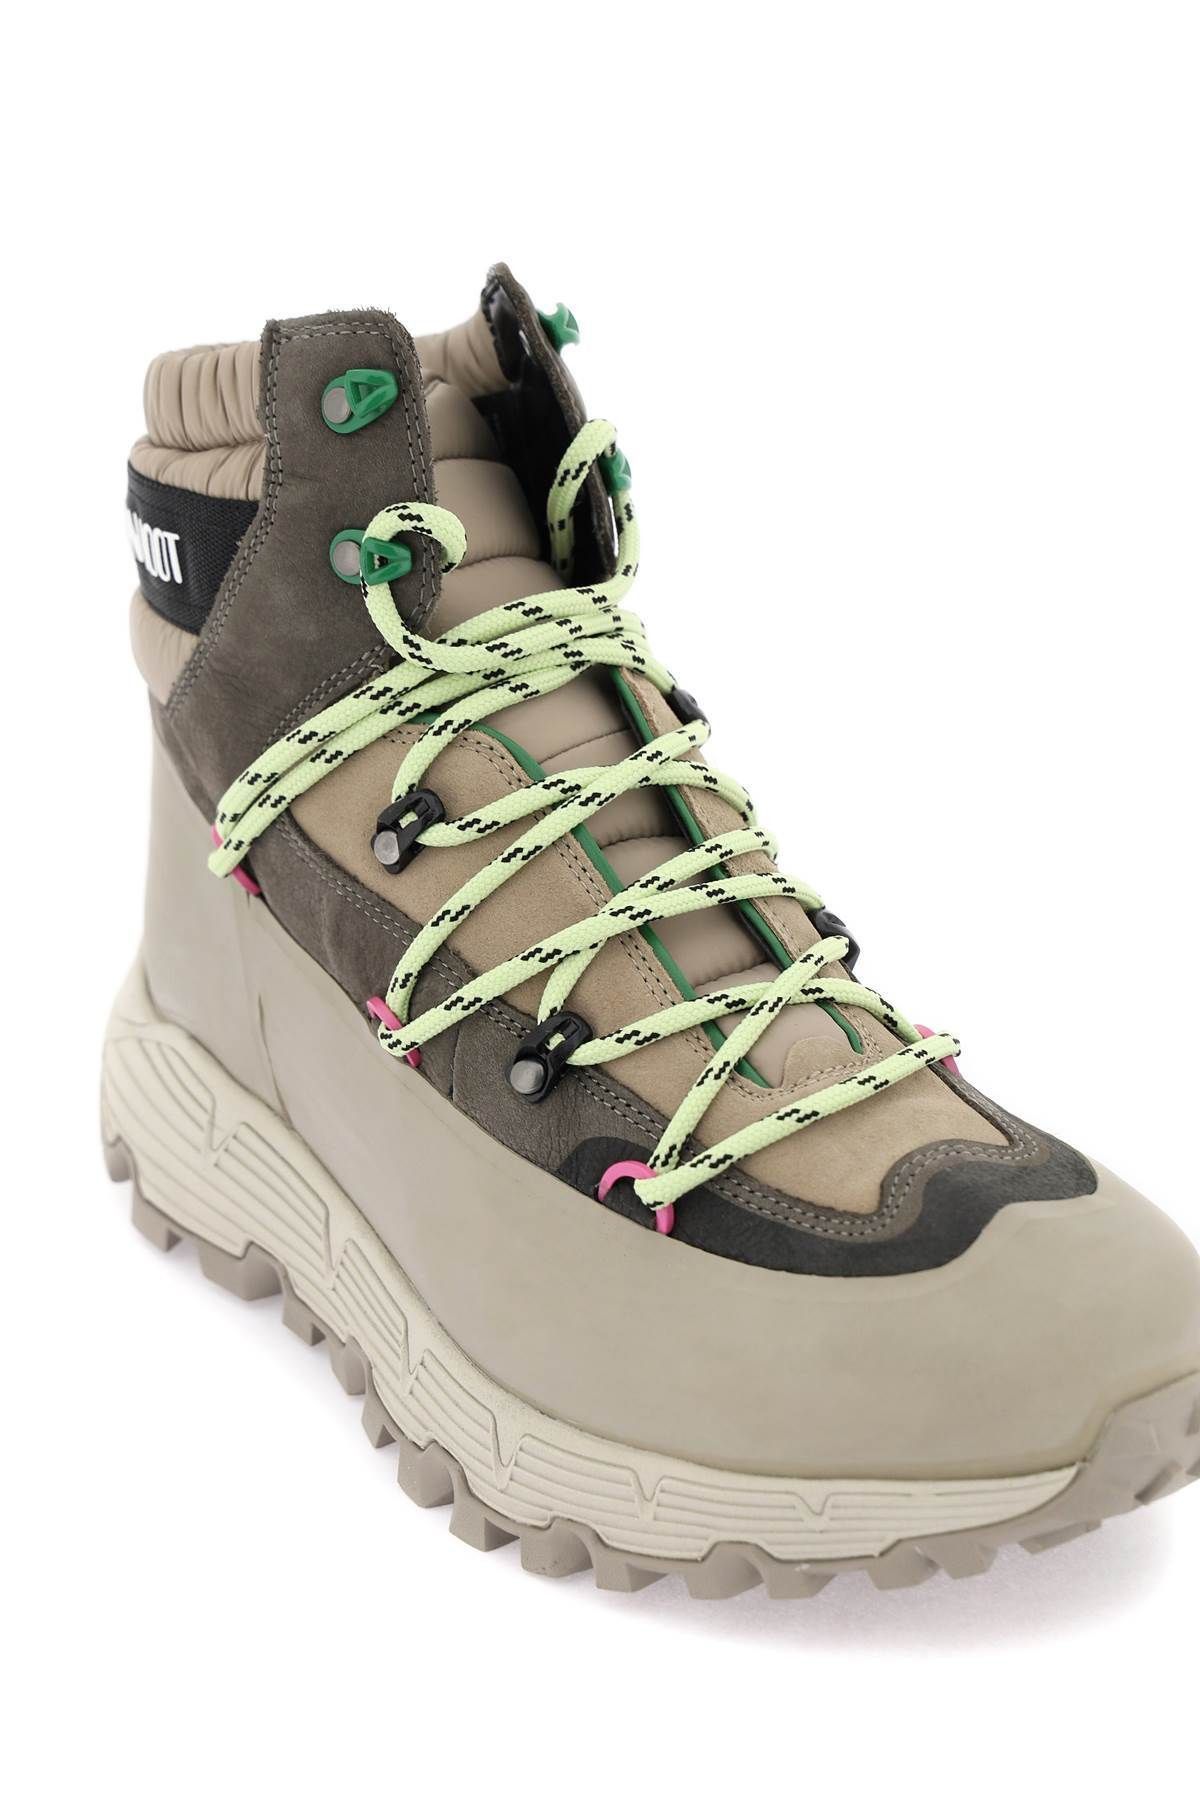 Moon Boot - Tech Hiker Hiking Boots Size EU 41 for Men - 4